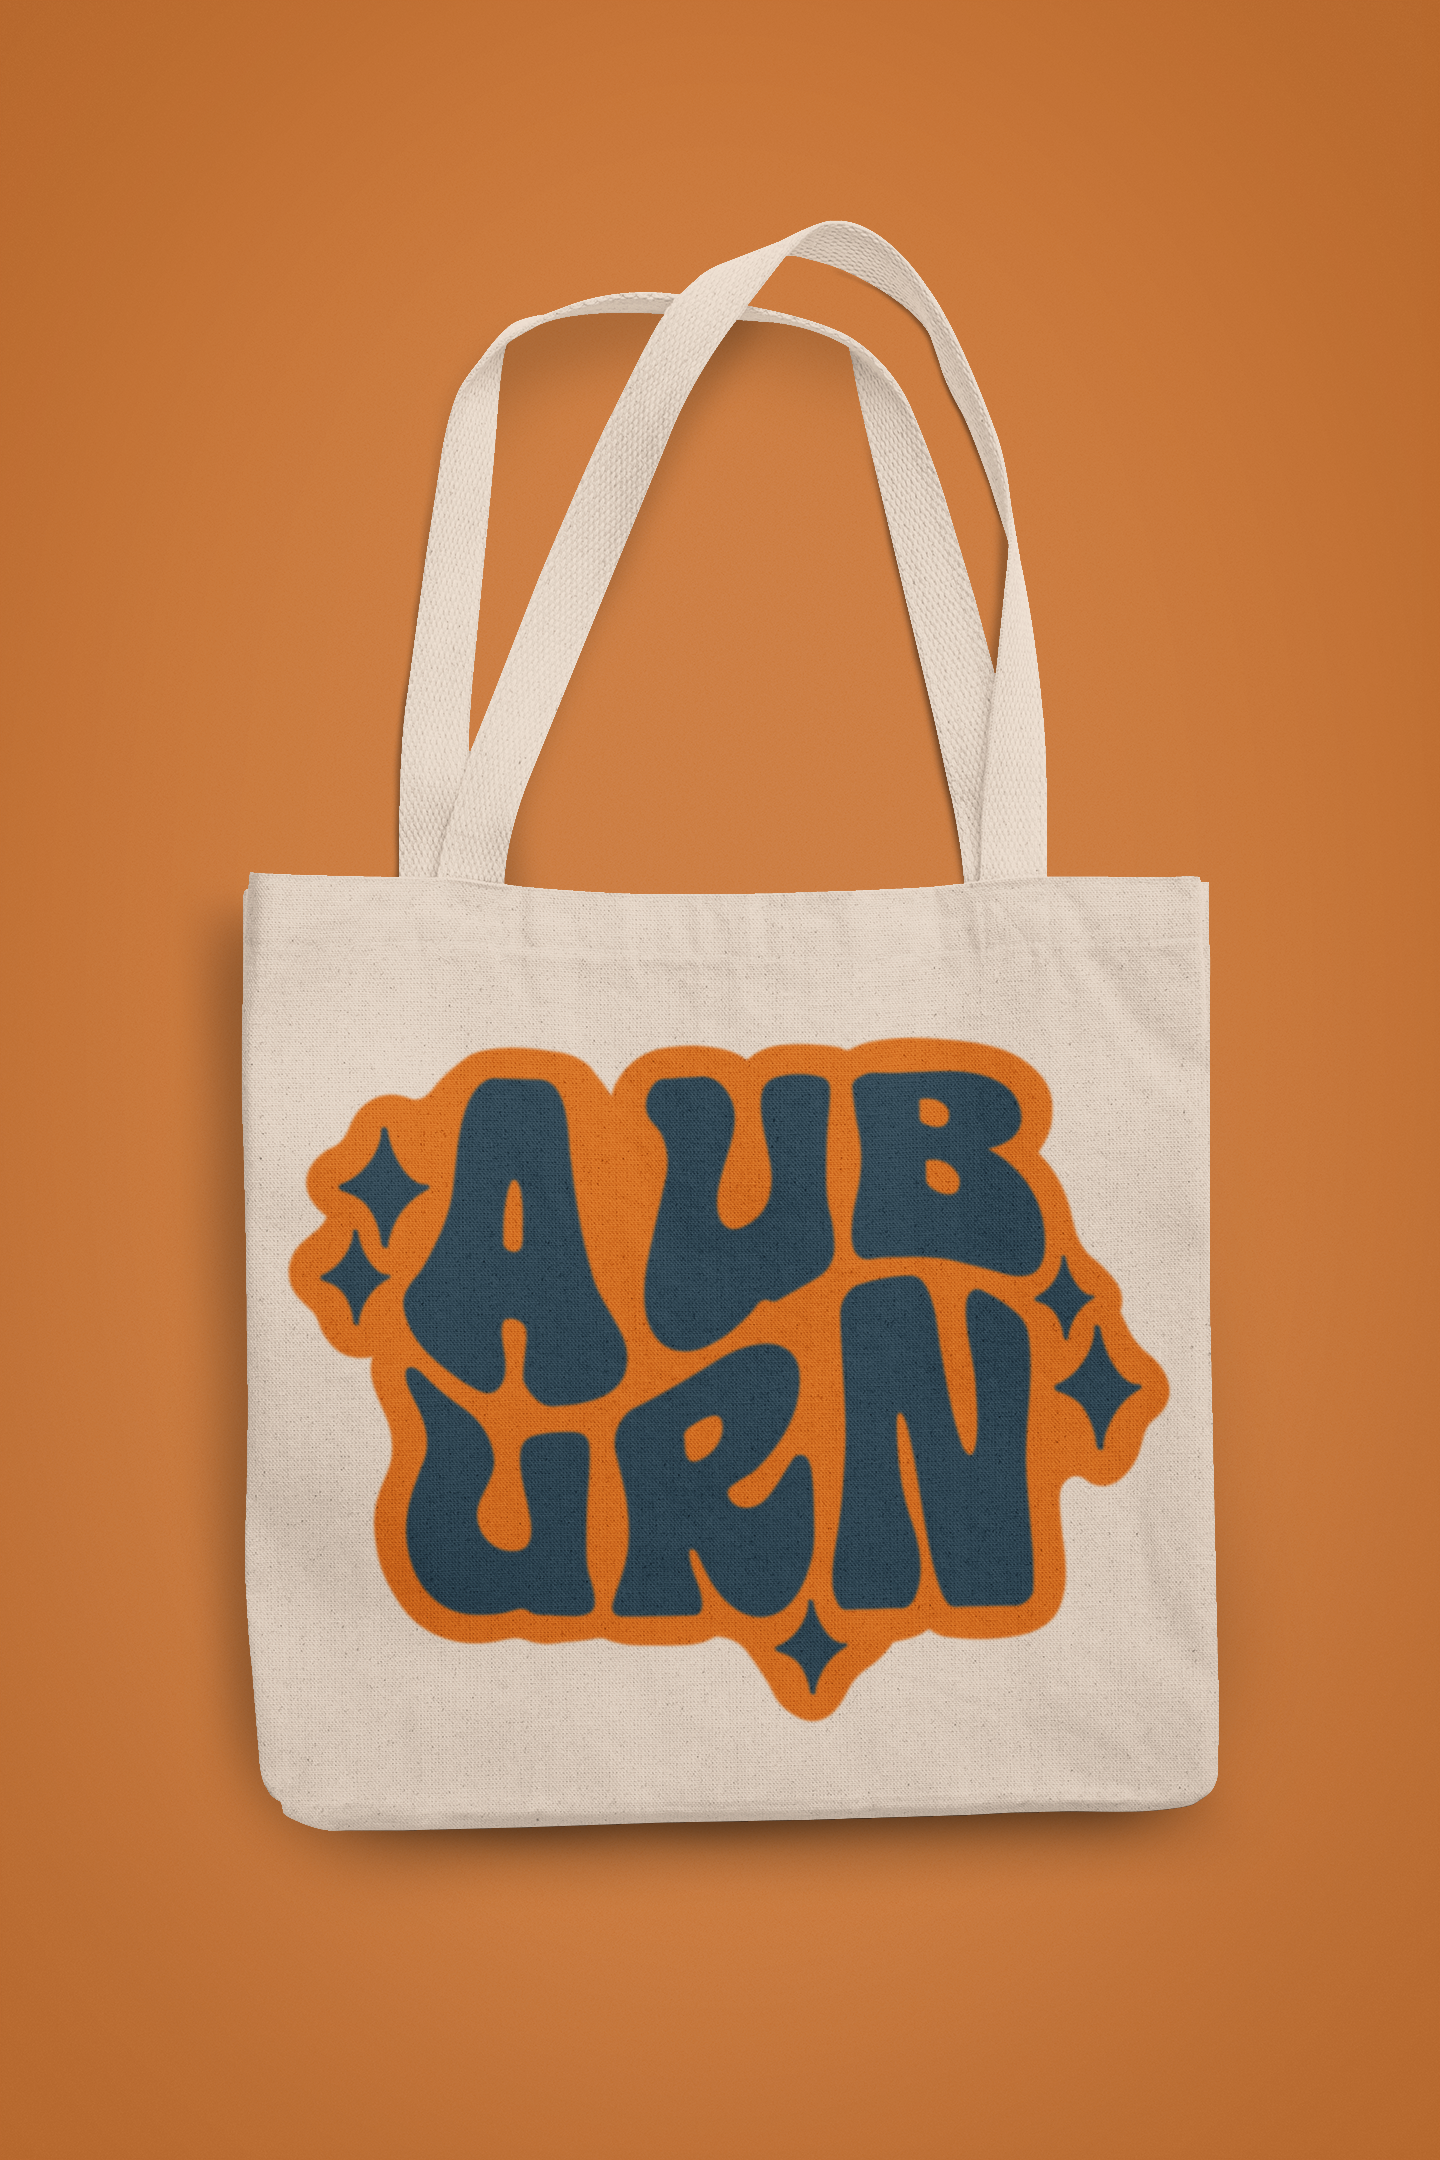 Auburn Starts Tote Bag SVG Vinyl